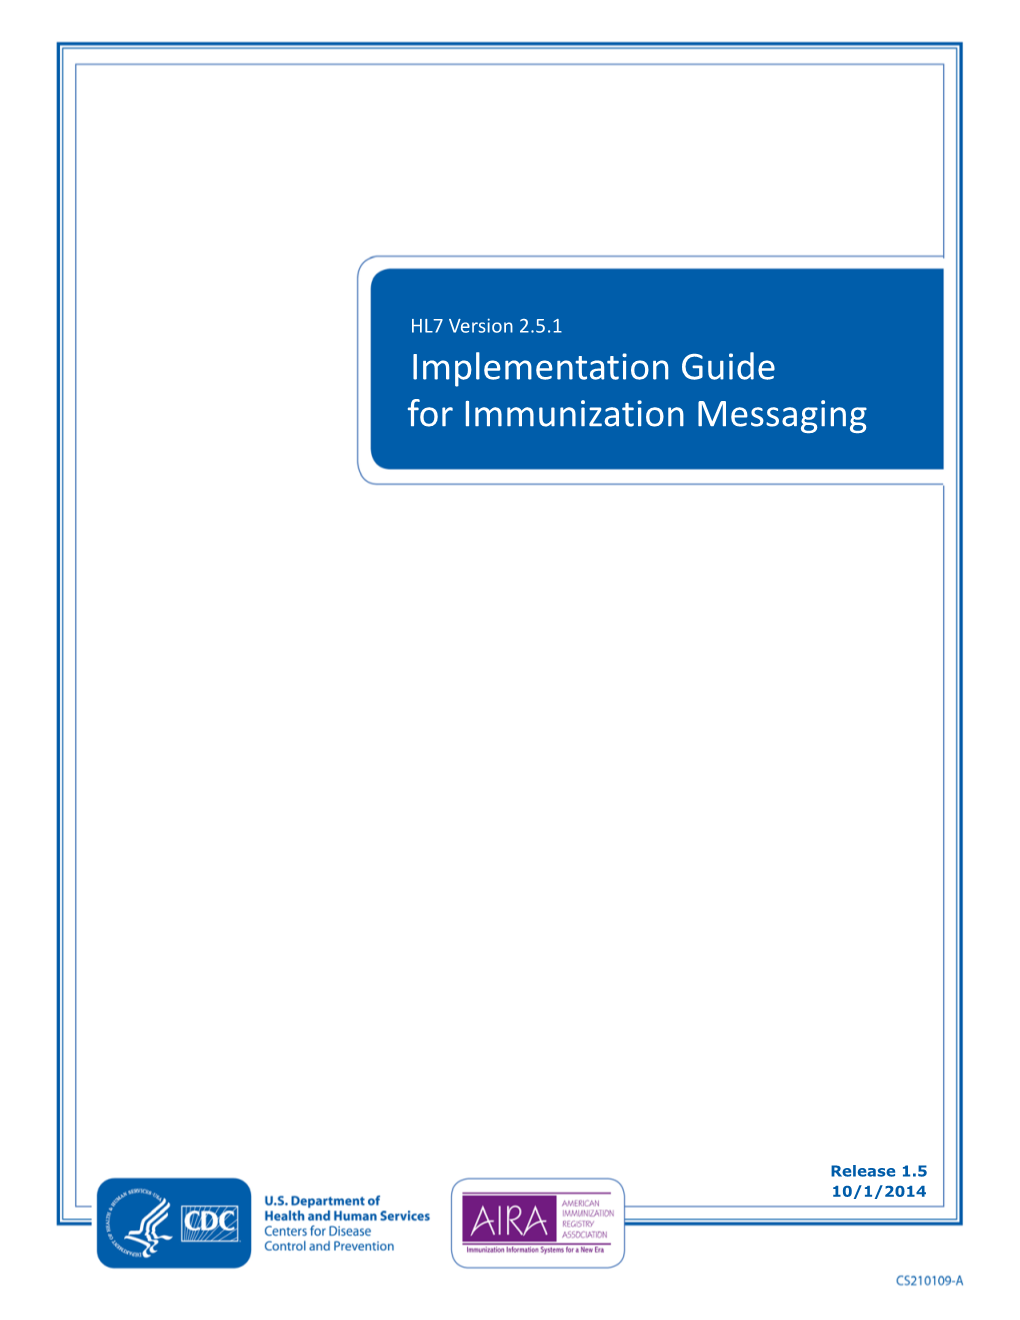 HL7 Version 2.5.1 Implementation Guide: Immunization Messaging (Release 1.5) 3/1/2014 Page 1